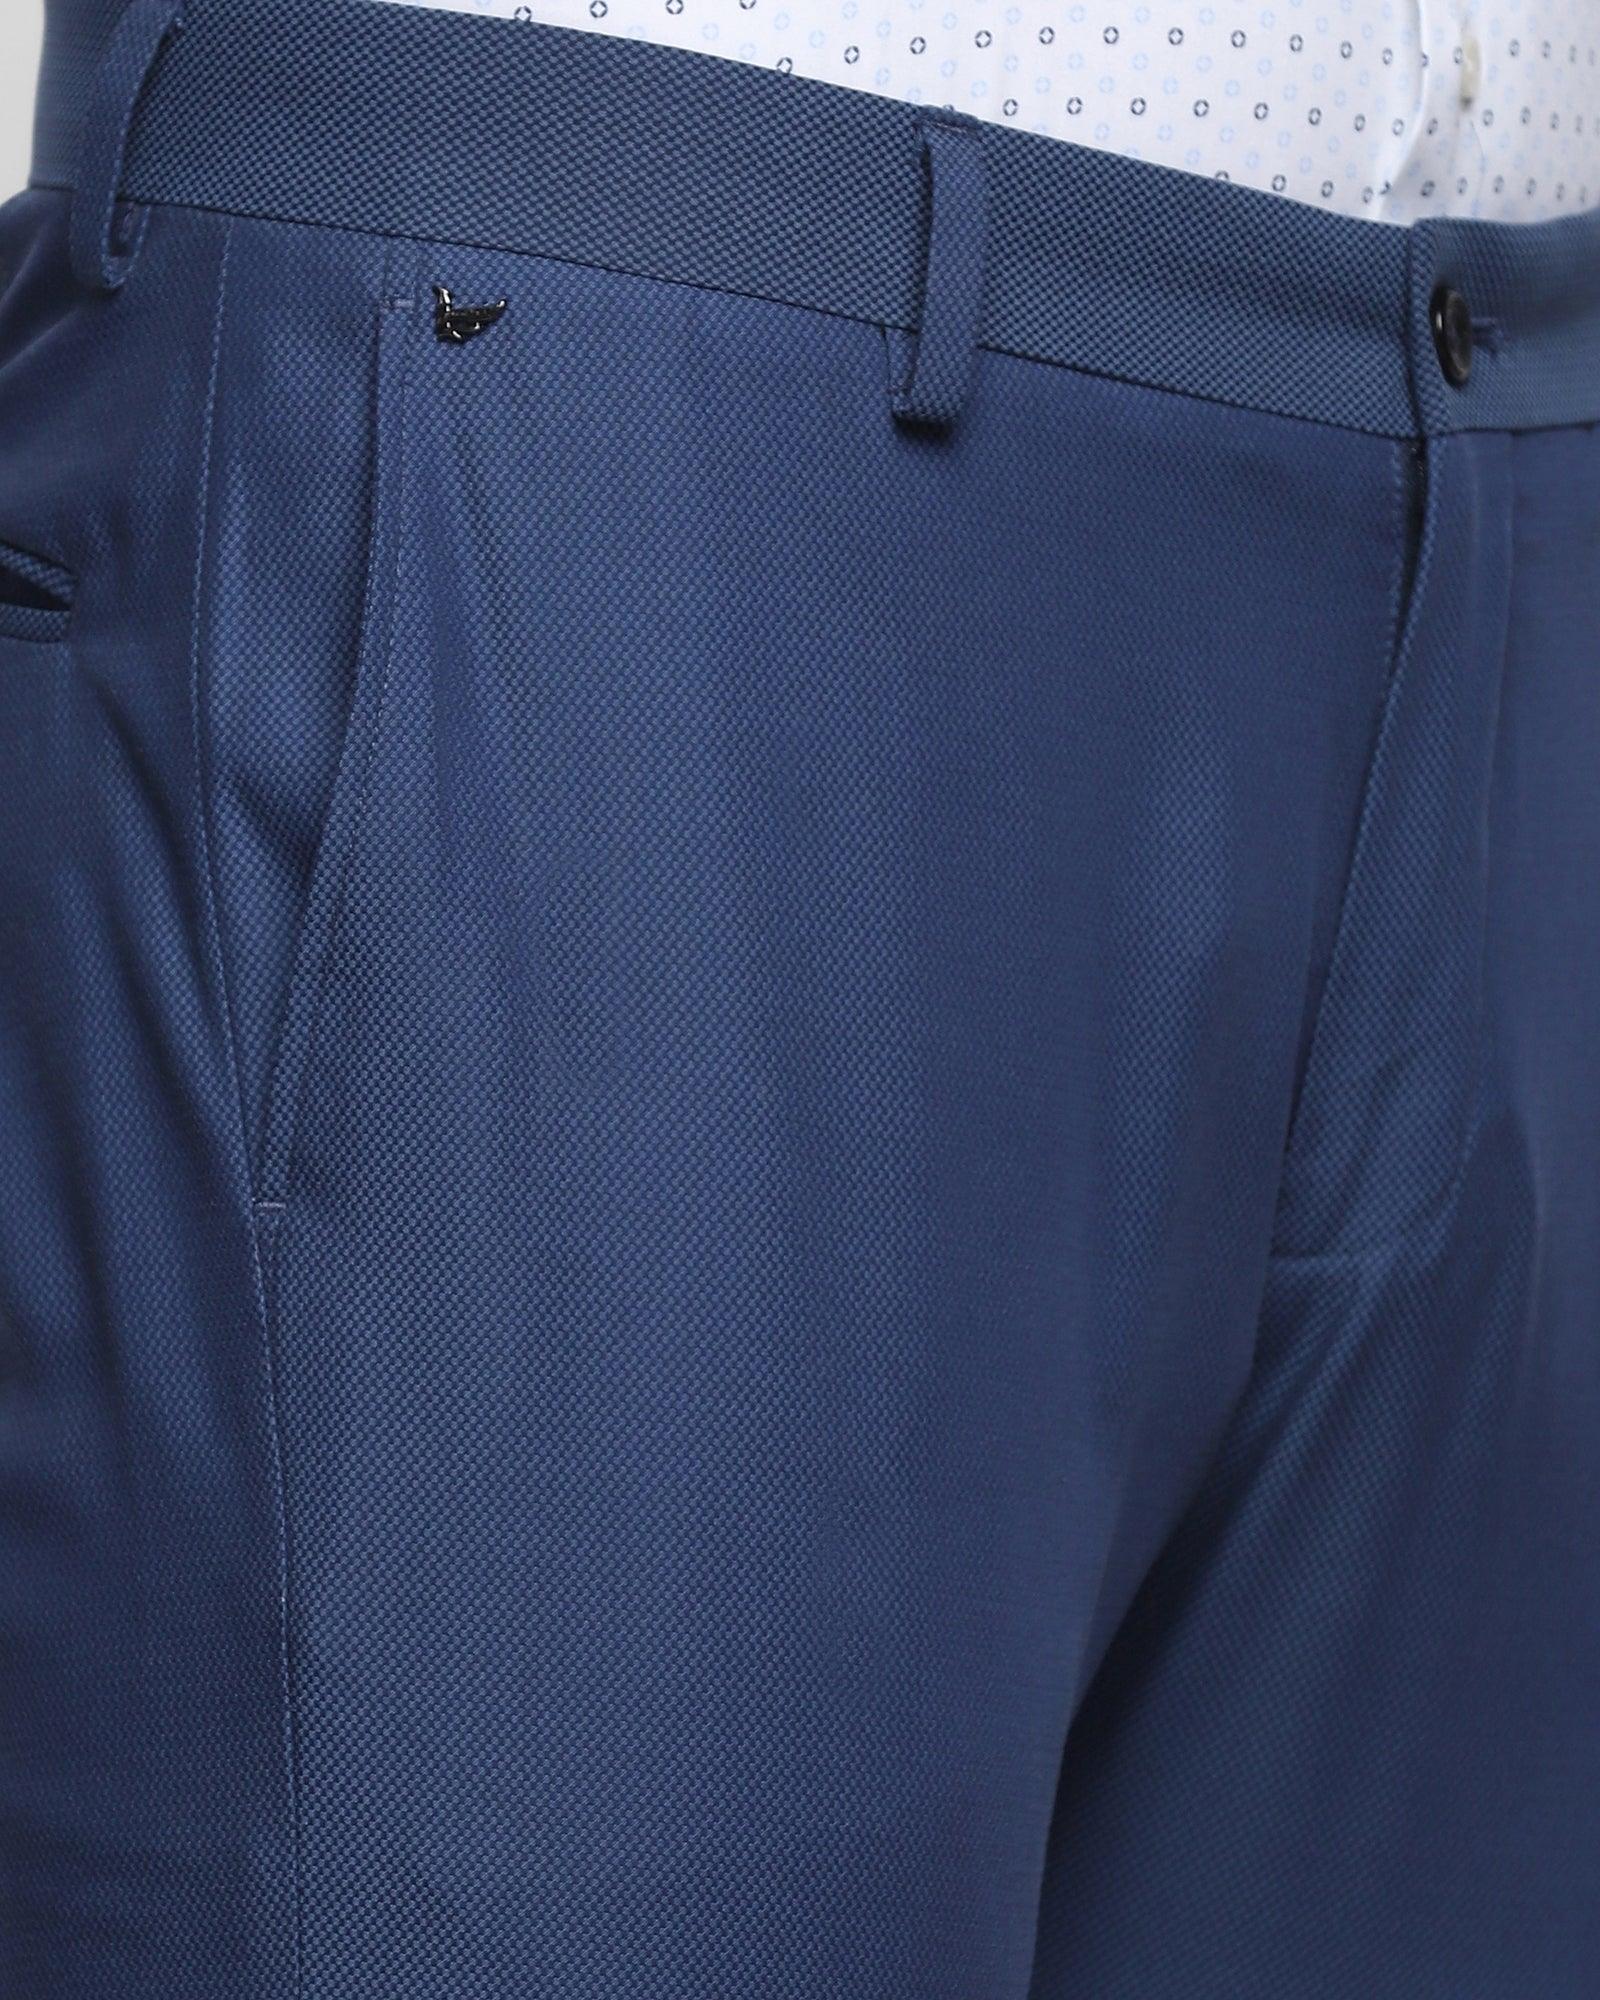 Slim Comfort B-95 Formal Blue Textured Trouser - Mandis